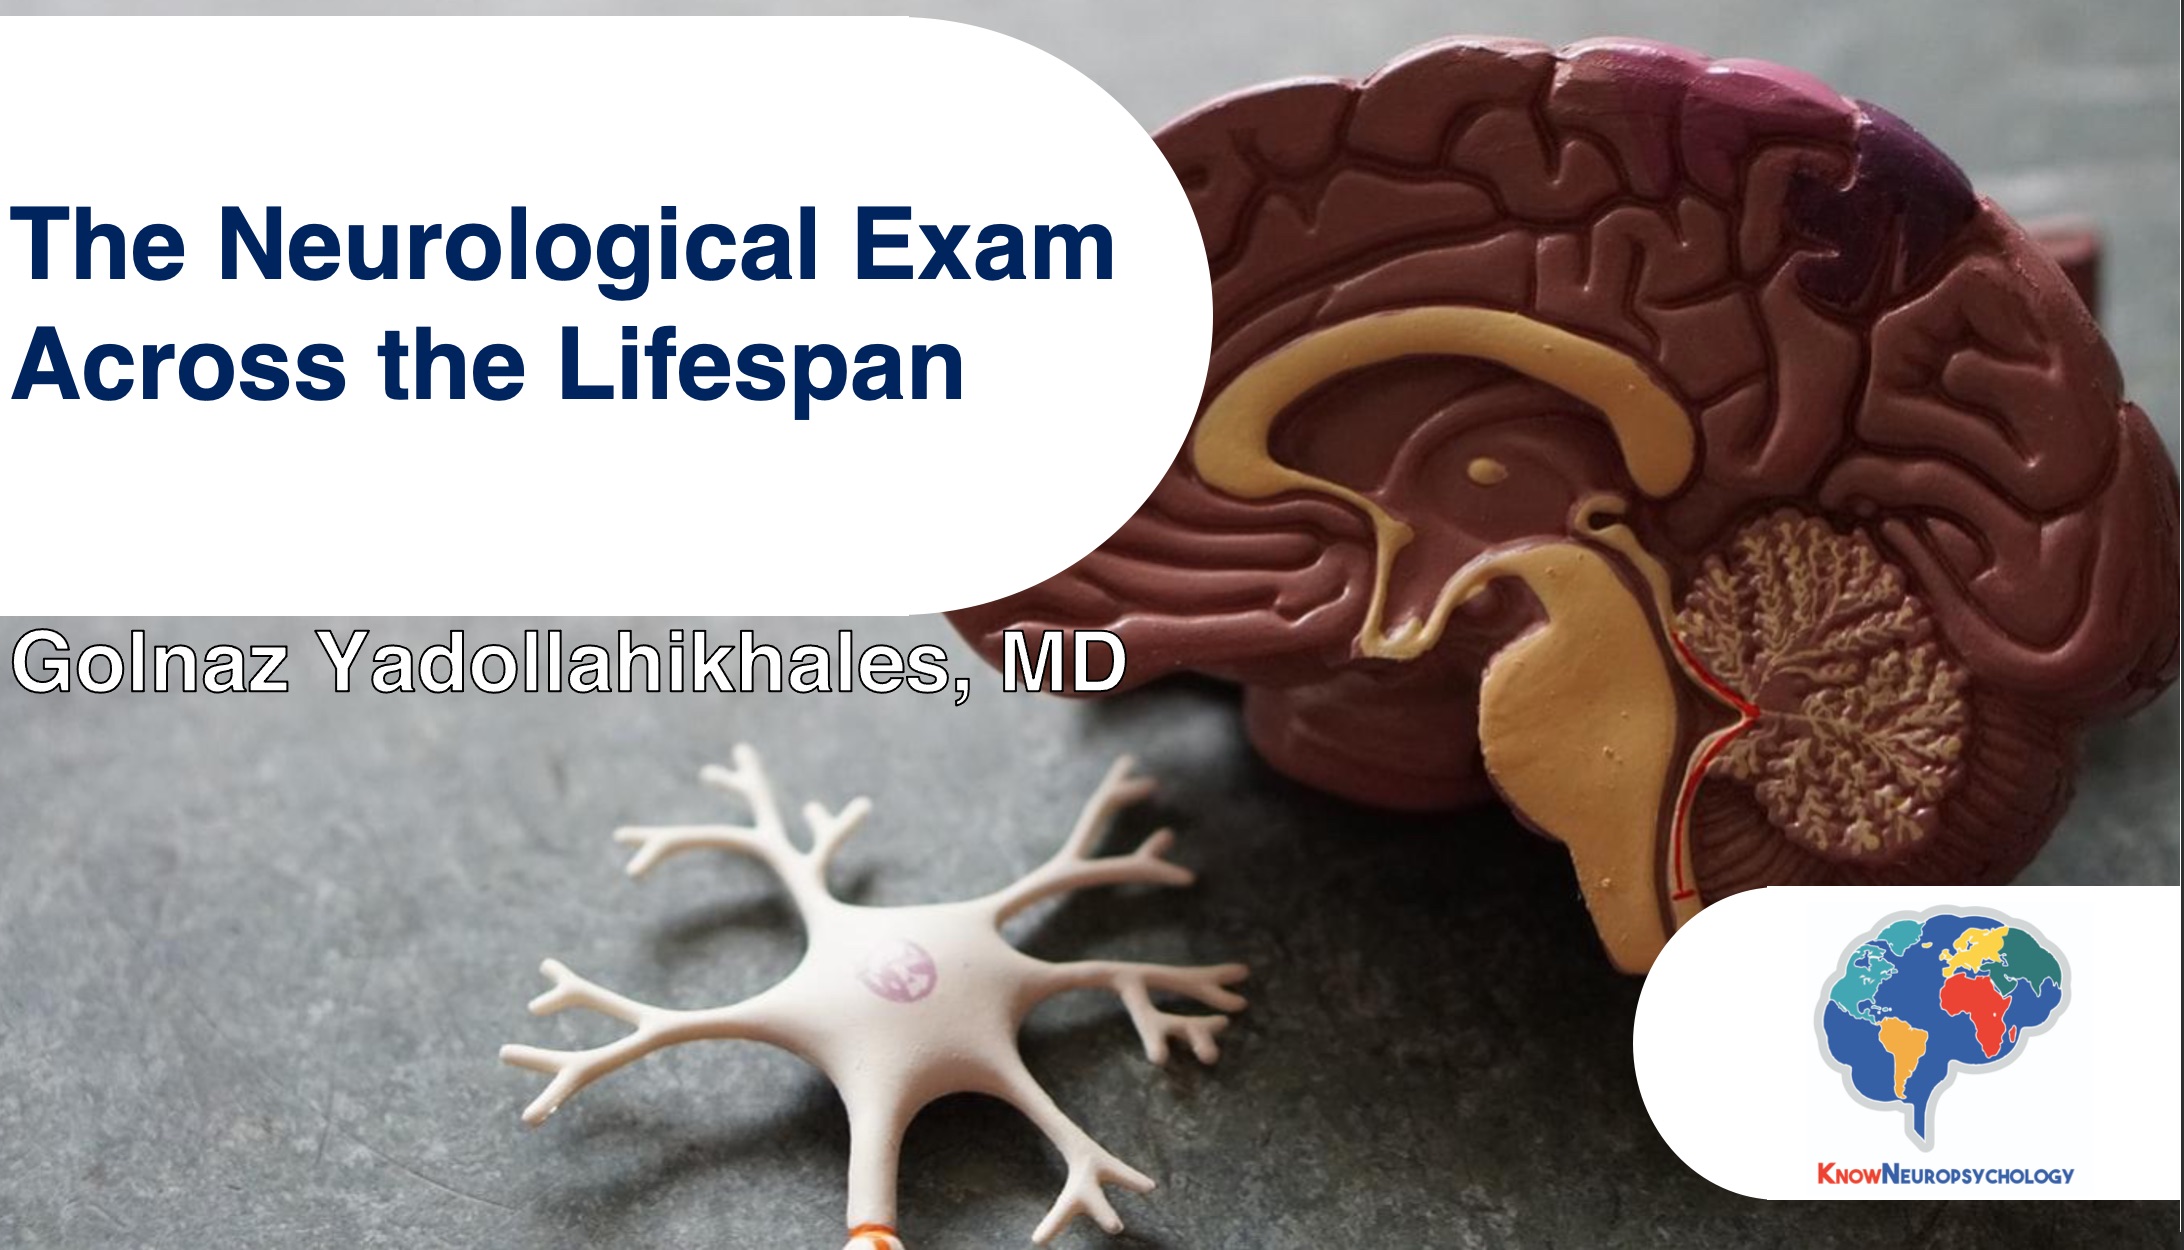 Neurological Exam Across the Lifespan with Dr. Golnaz Yadollahikhales